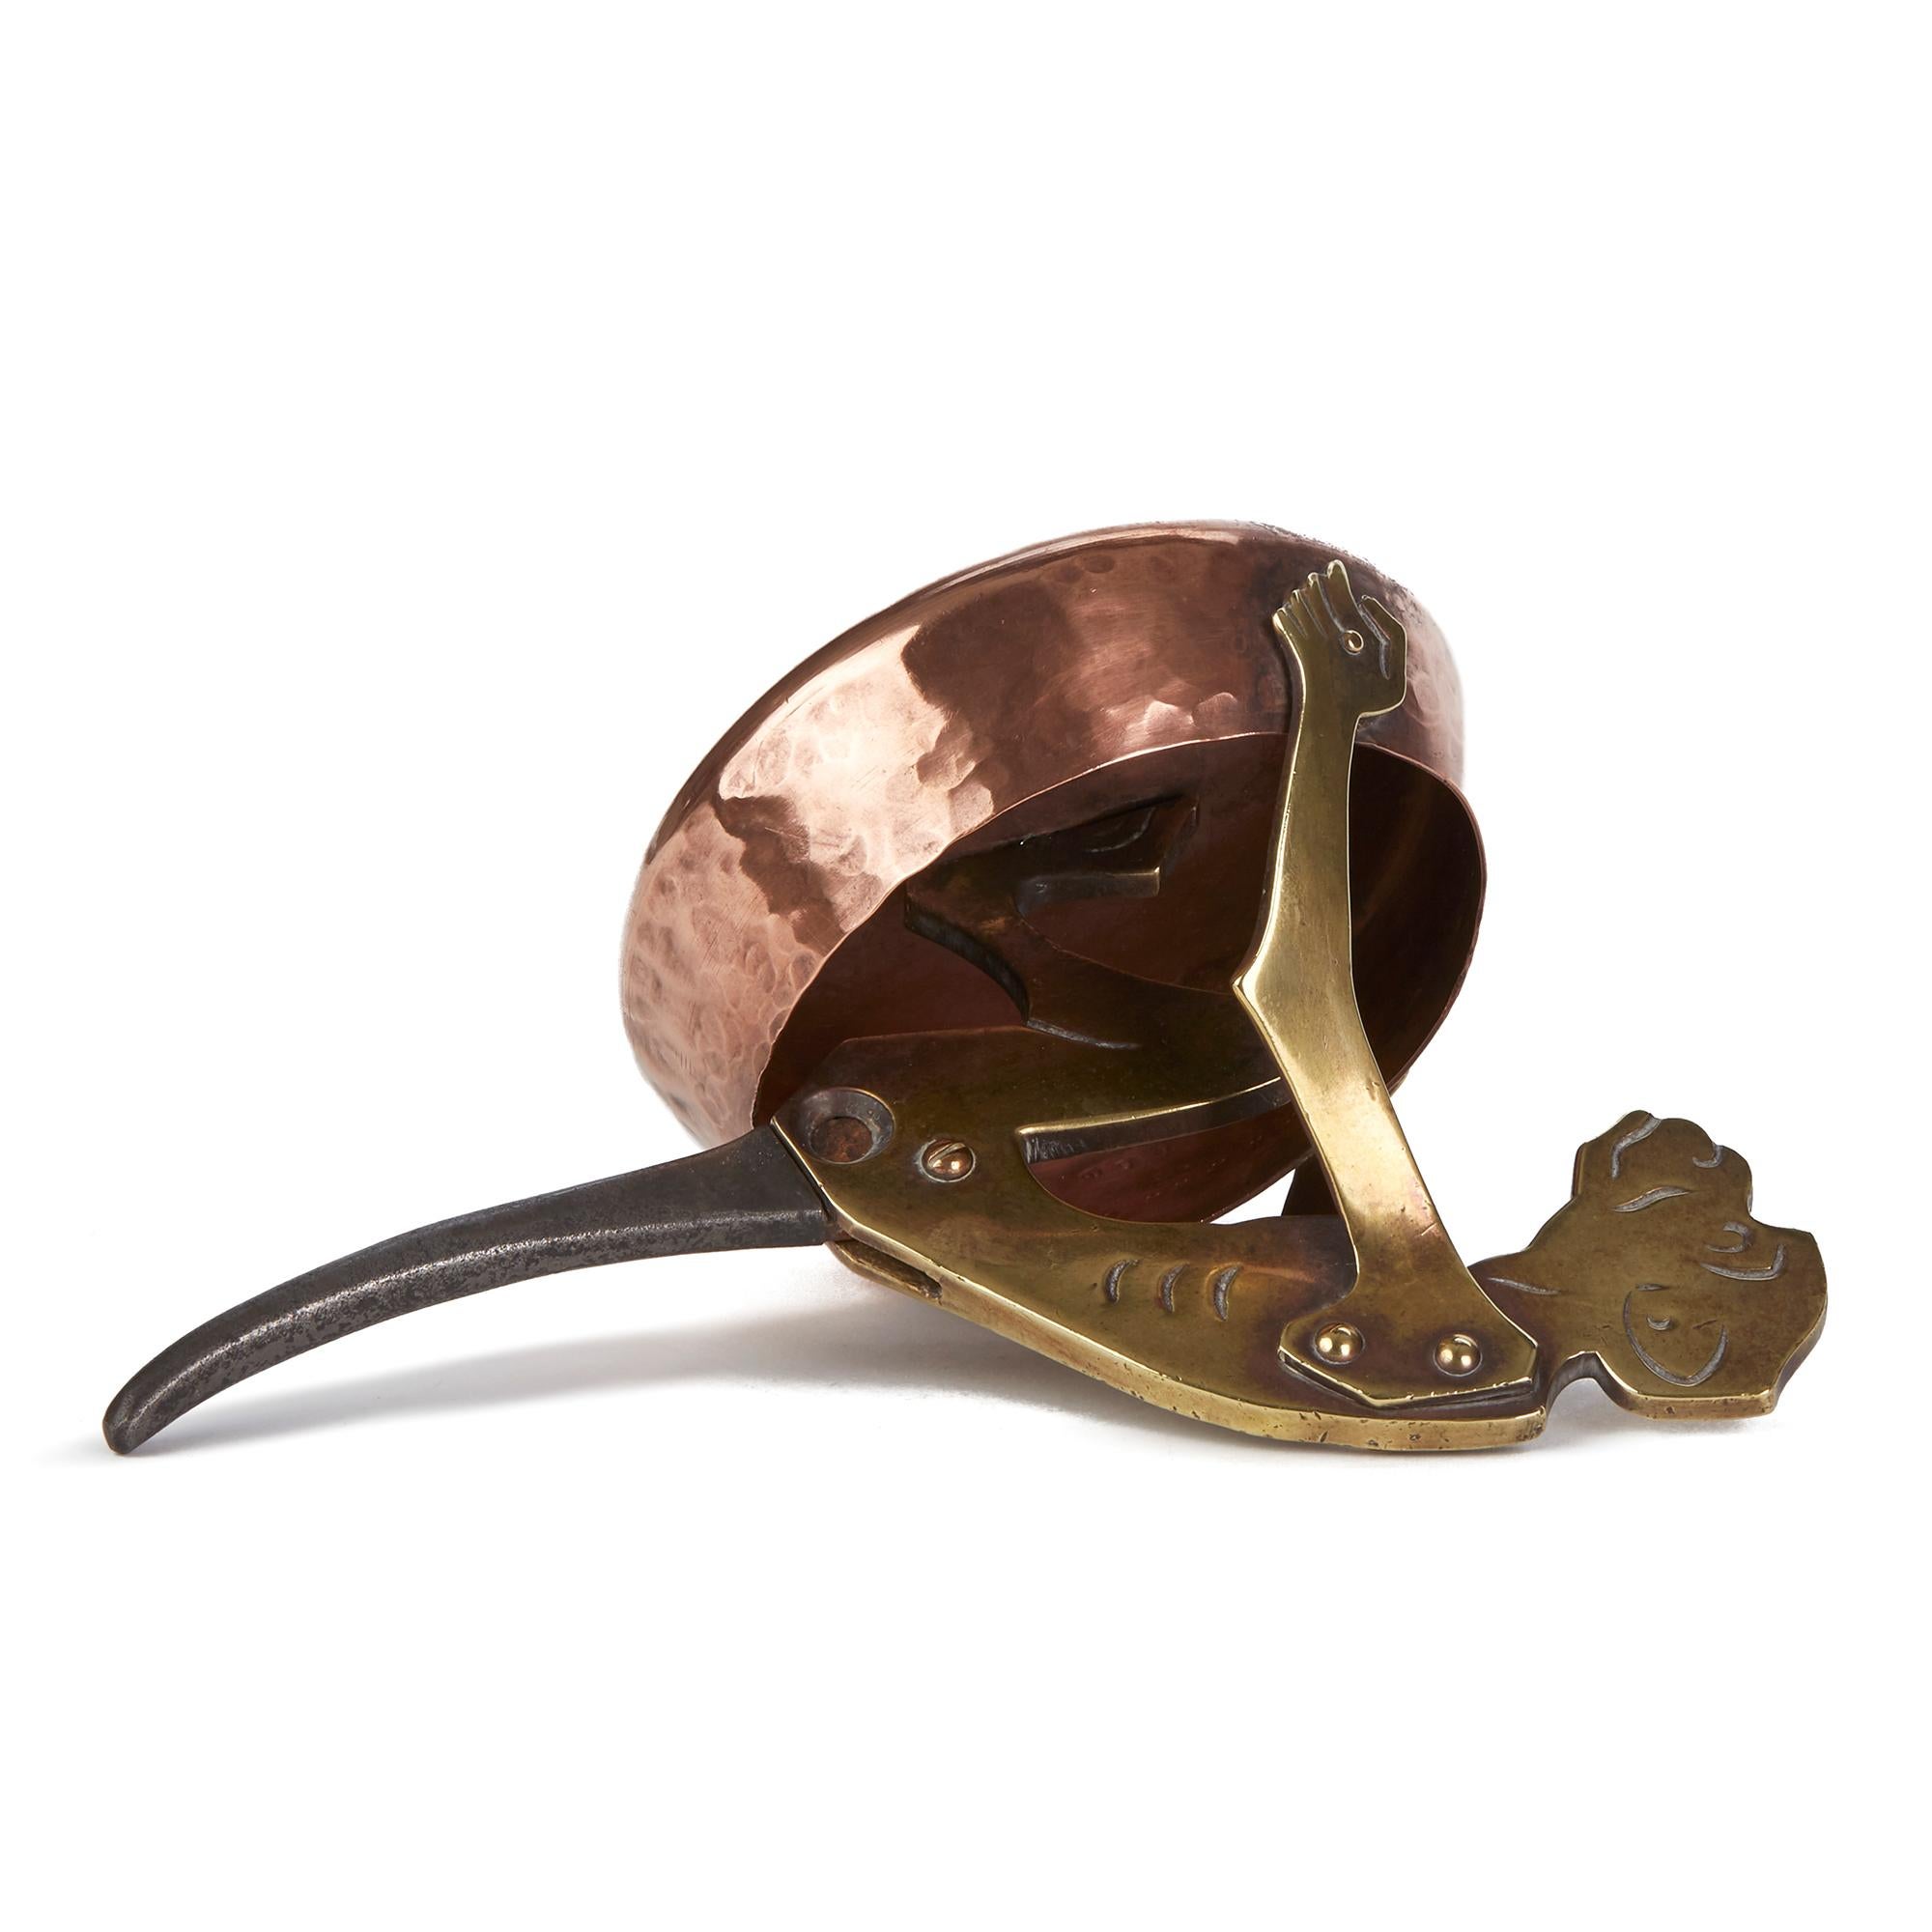 Hand-Crafted Ignatius Taschner Jugendstil Brass and Copper Monkey Cheroot Cutter, circa 1900 For Sale